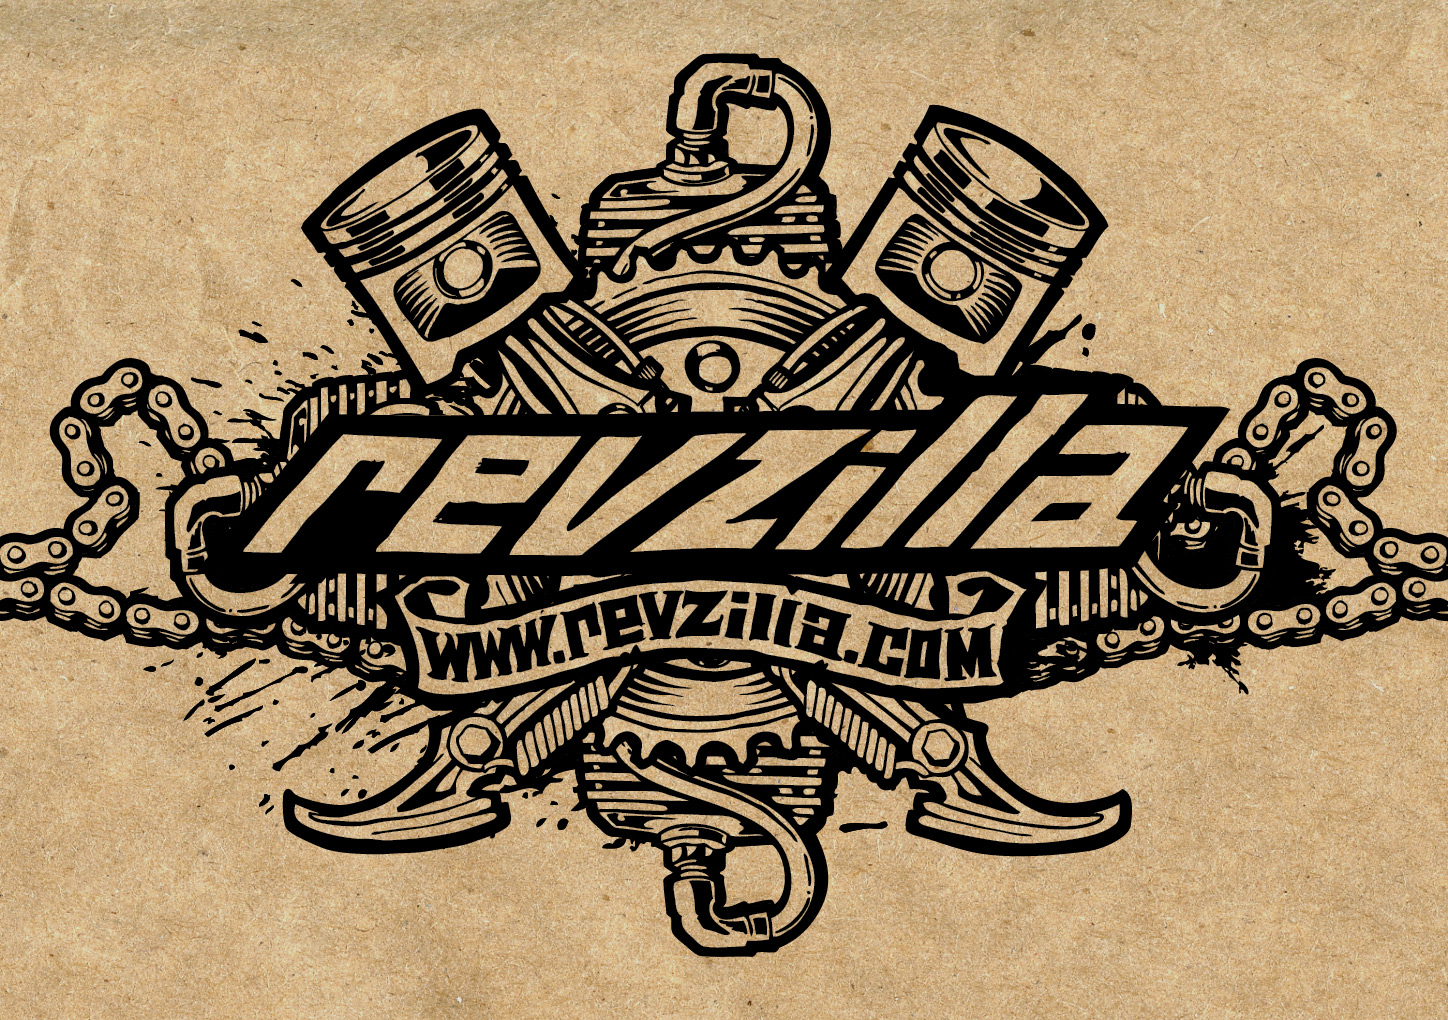 One color Revzilla logo on cardboard background